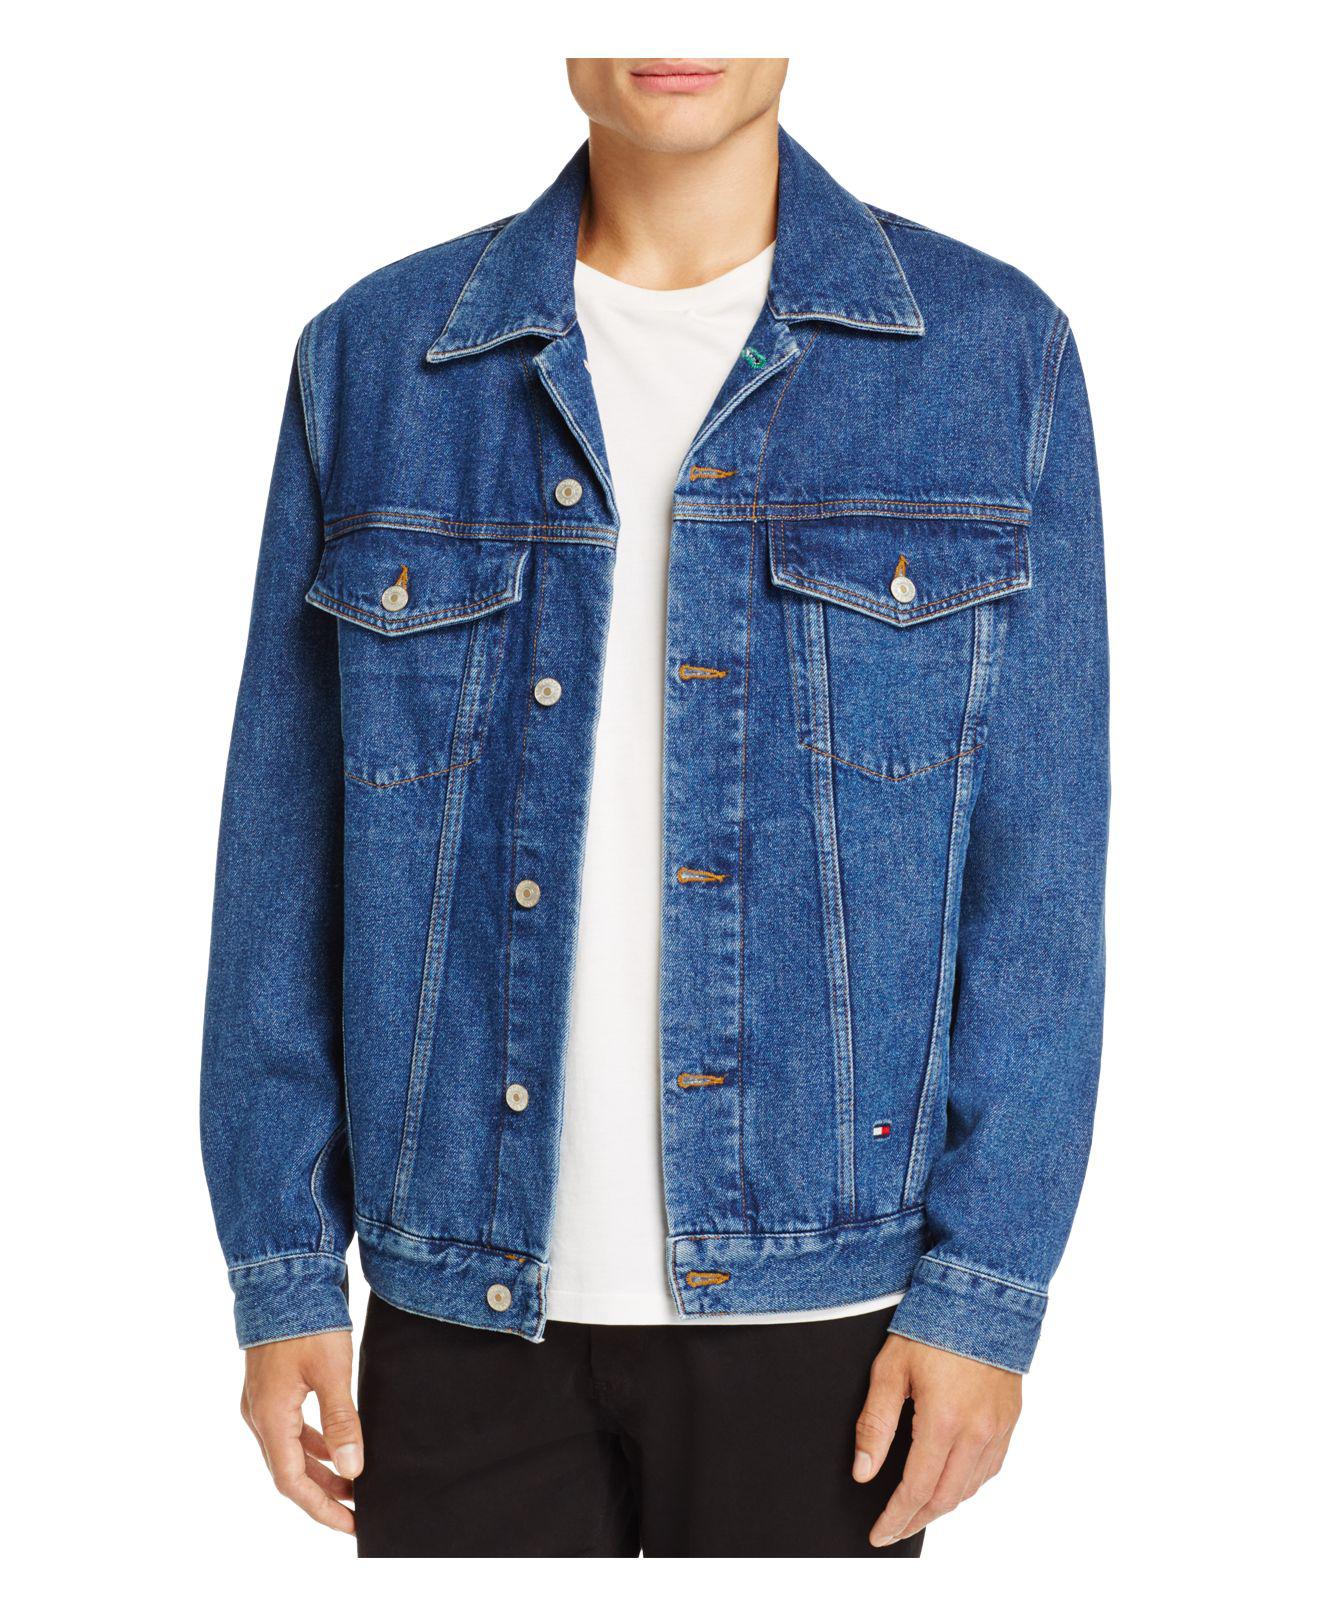 Lyst - Tommy Hilfiger Tommy Jeans 90's Denim Jacket in Blue